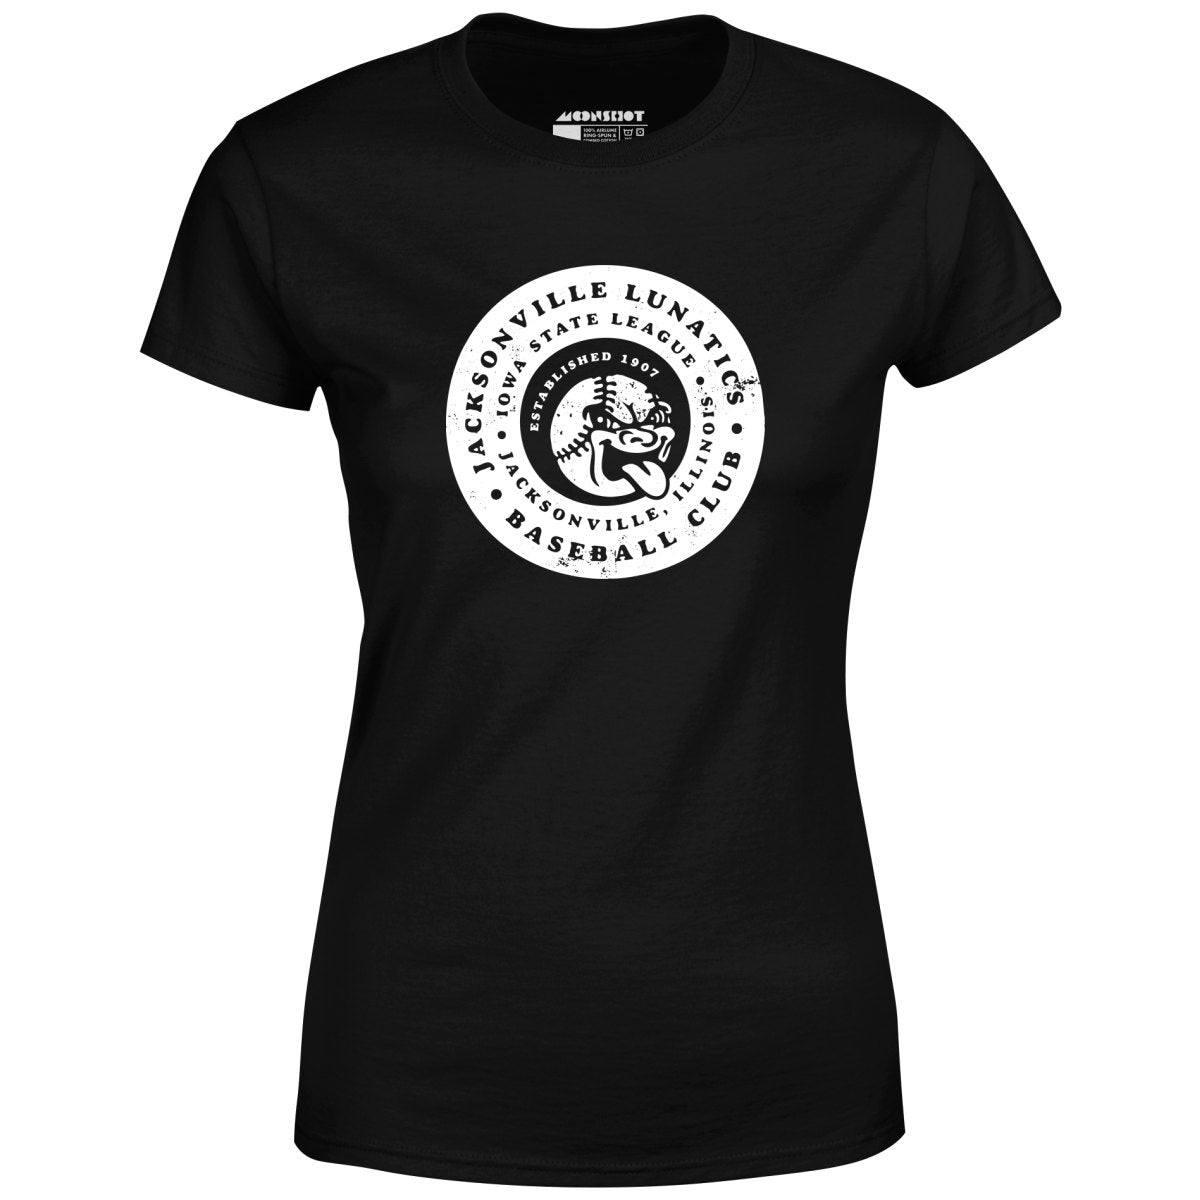 Jacksonville Lunatics - Illinois - Vintage Defunct Baseball Teams - Women's T-Shirt